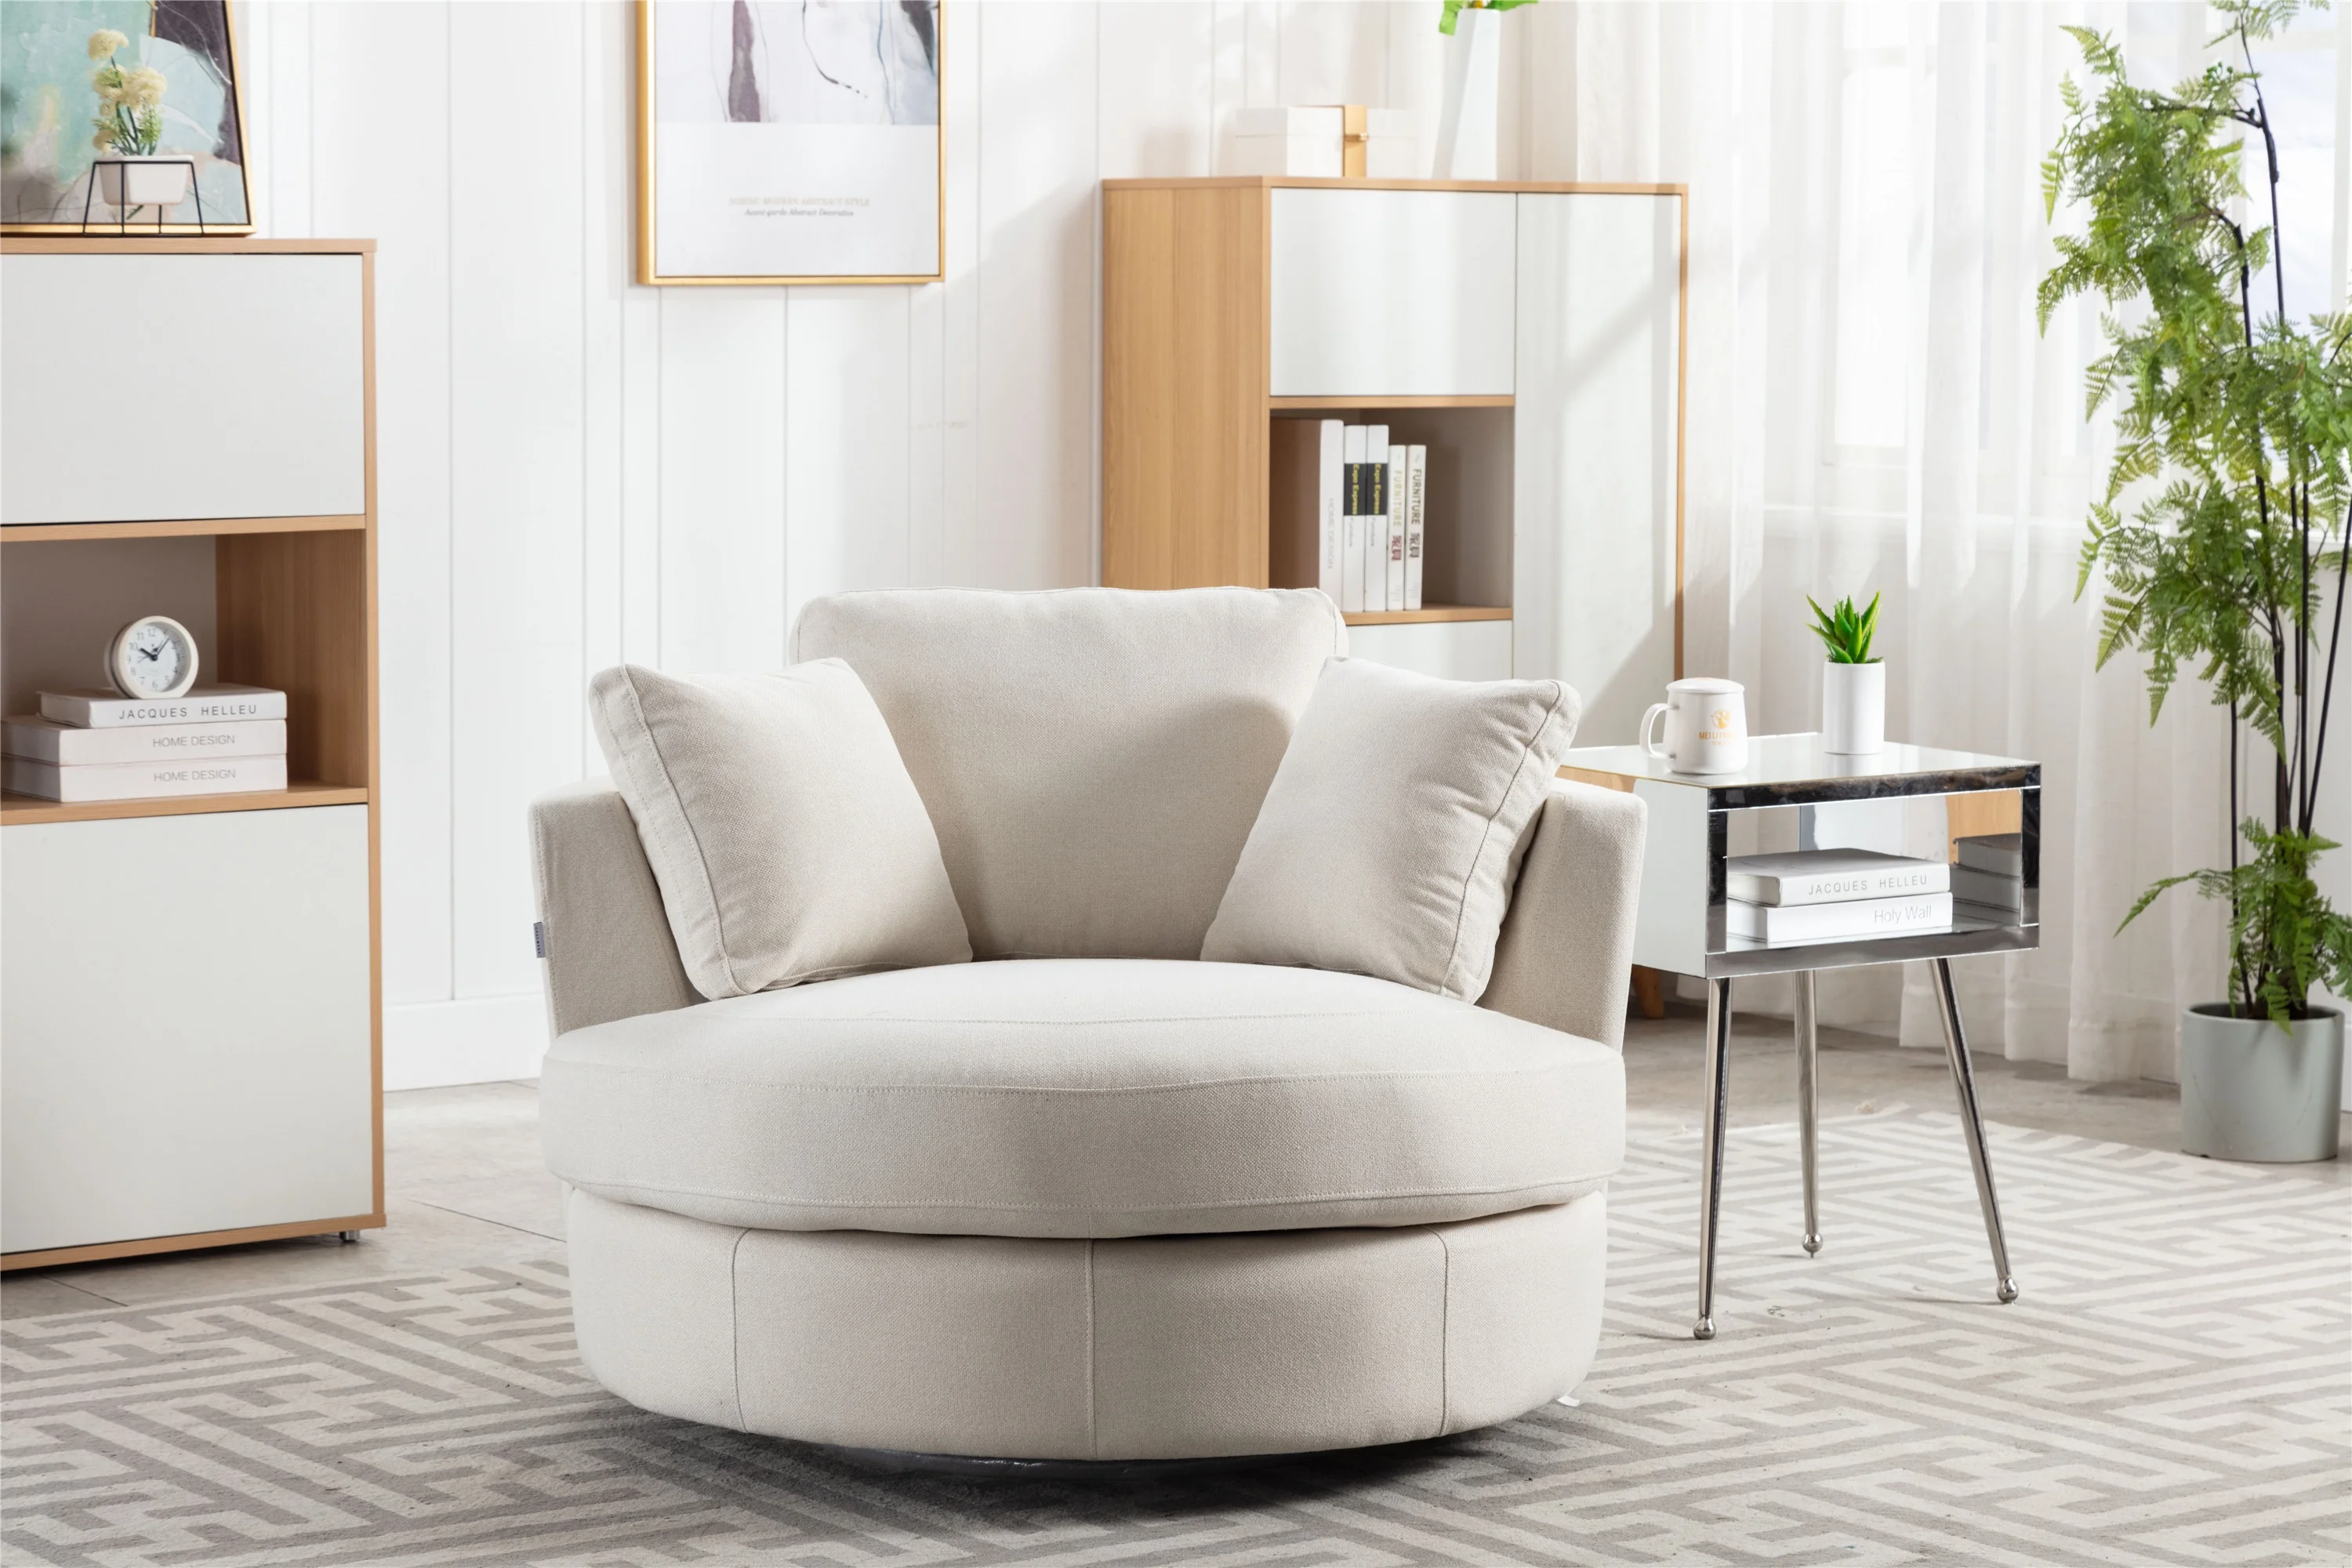 Modern Akili swivel accent chair barrel chair for hotel living room Modern leisure chair